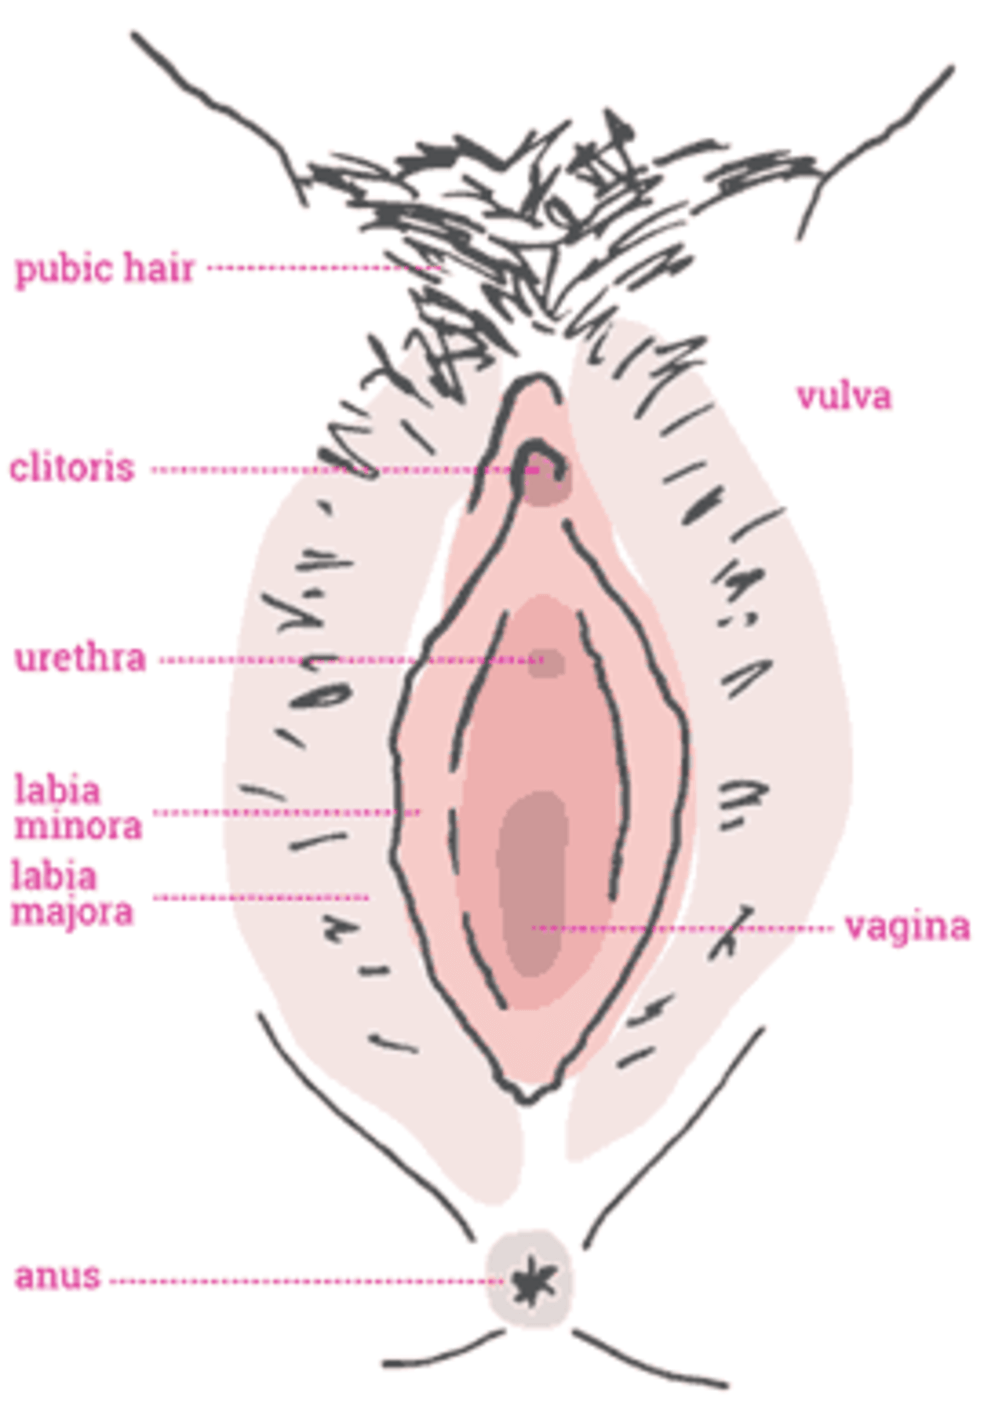 Vulva and clitoris pictures